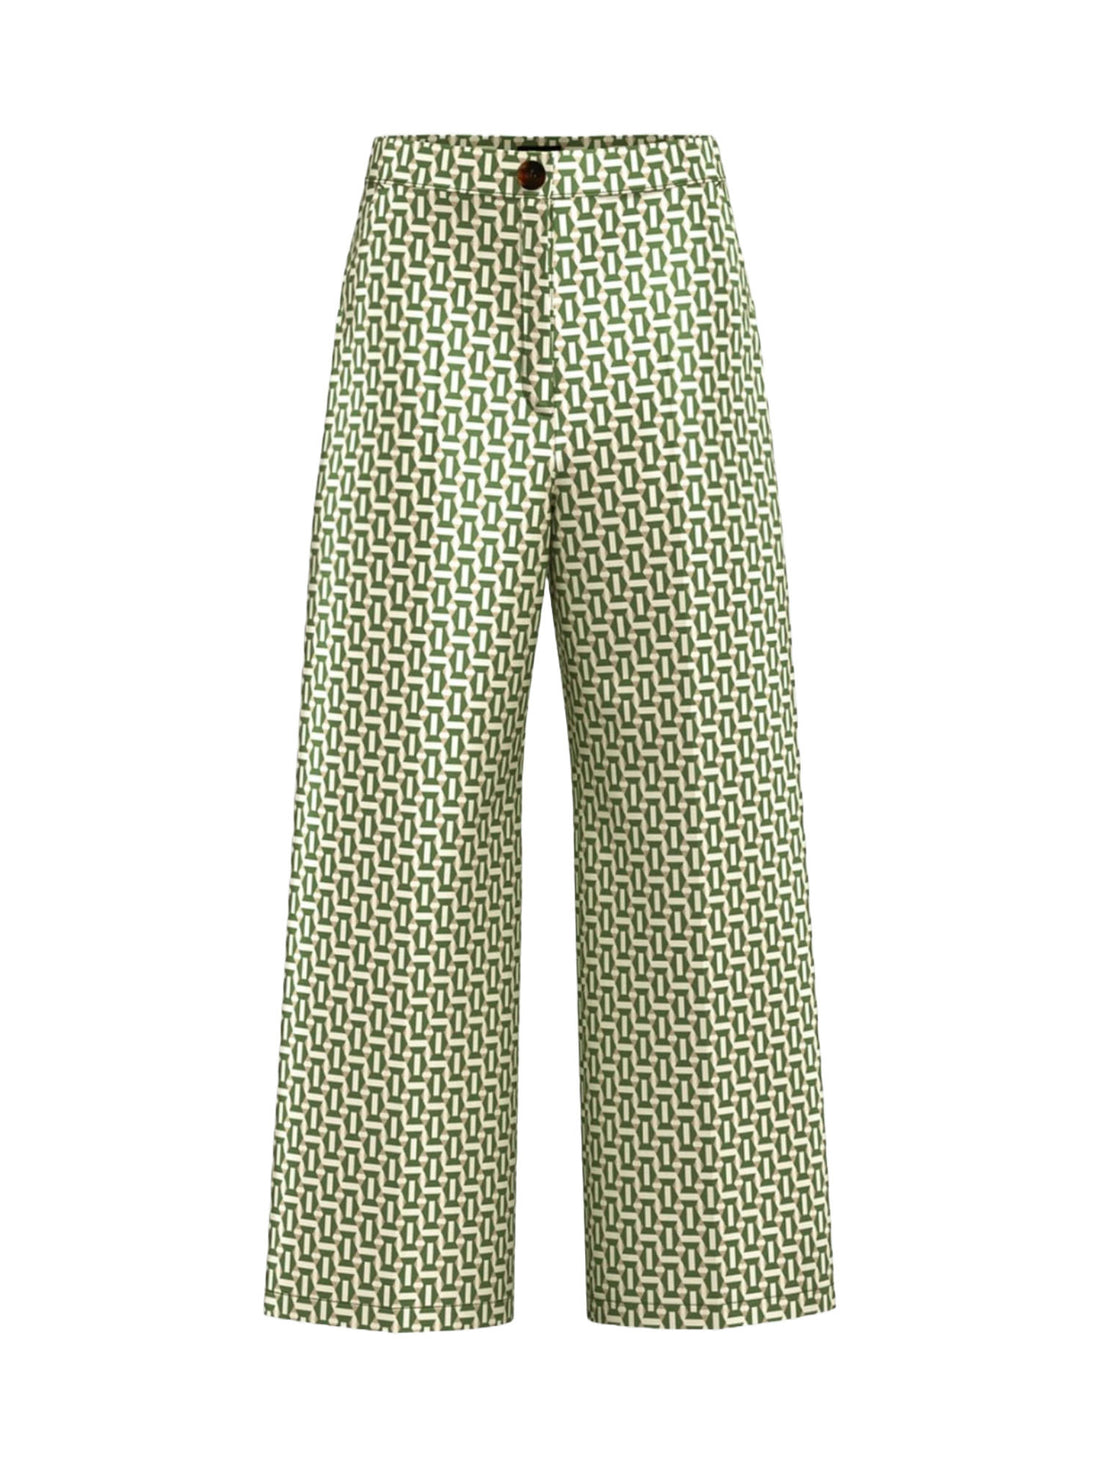 Pantaloni Verde Emme Marella